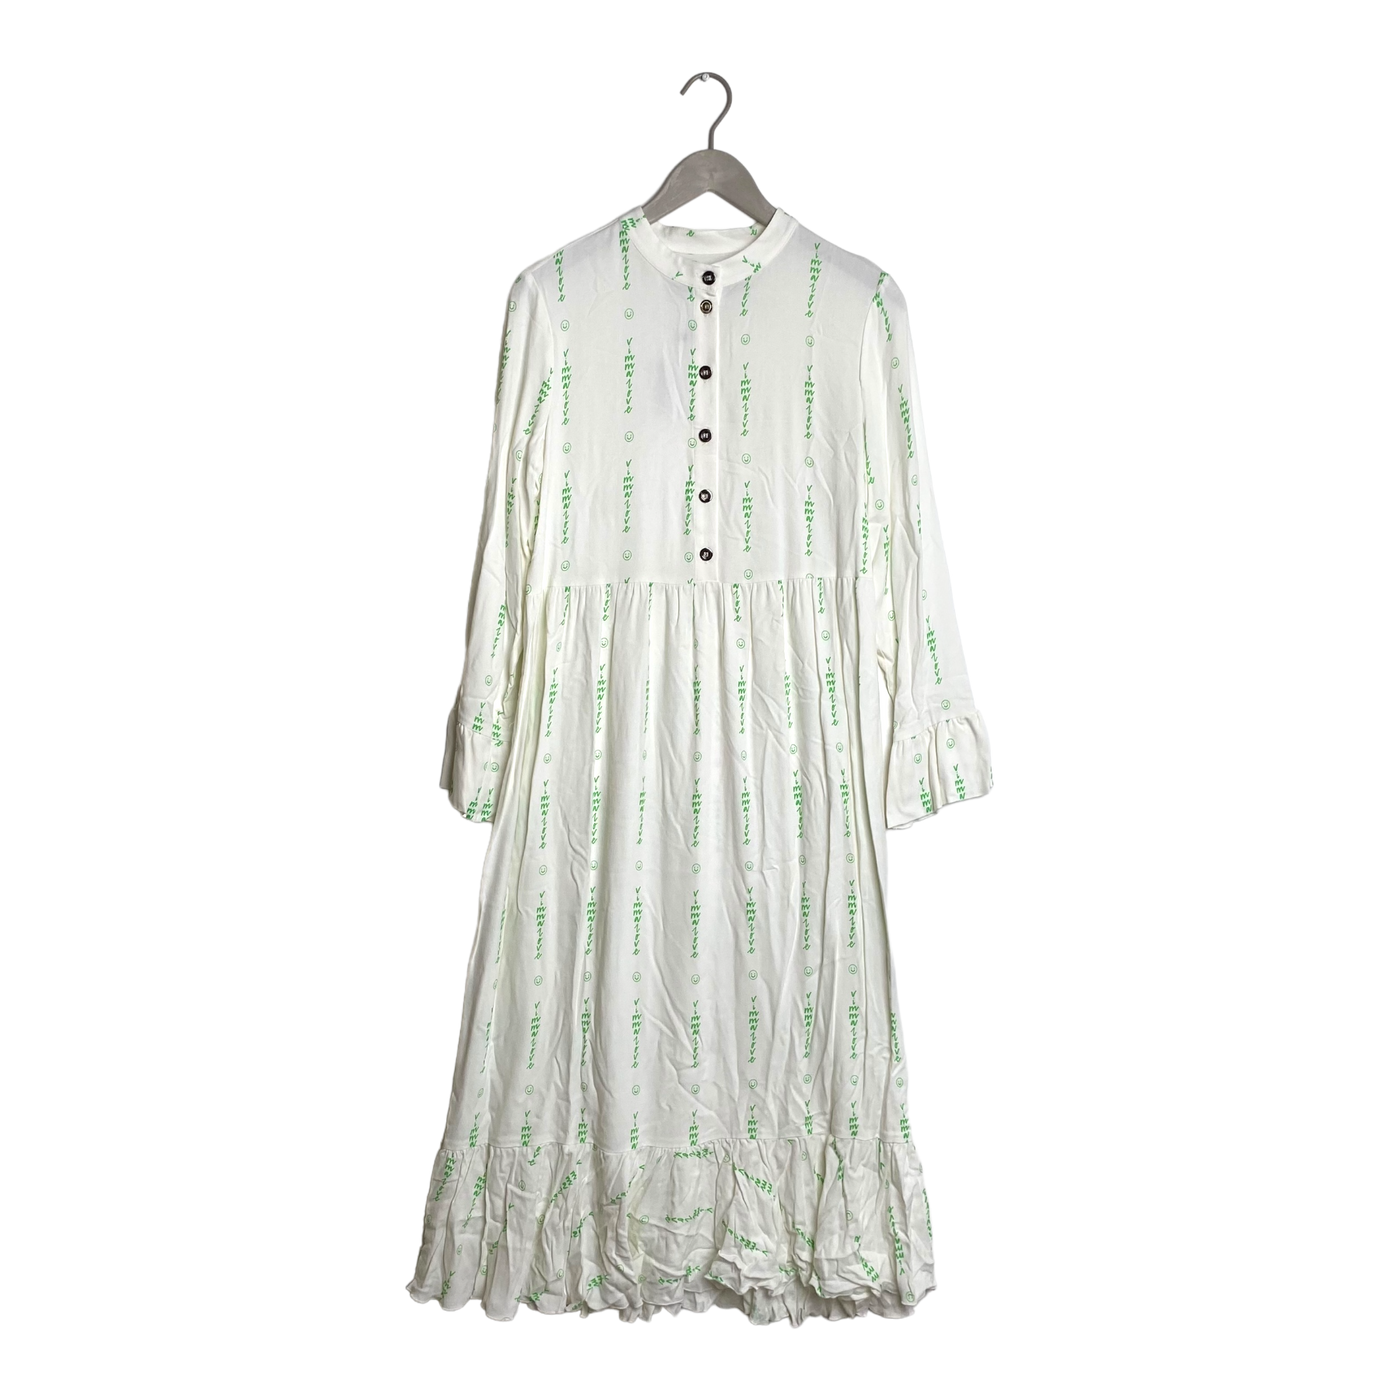 Vimma tuuva dress, white | woman S